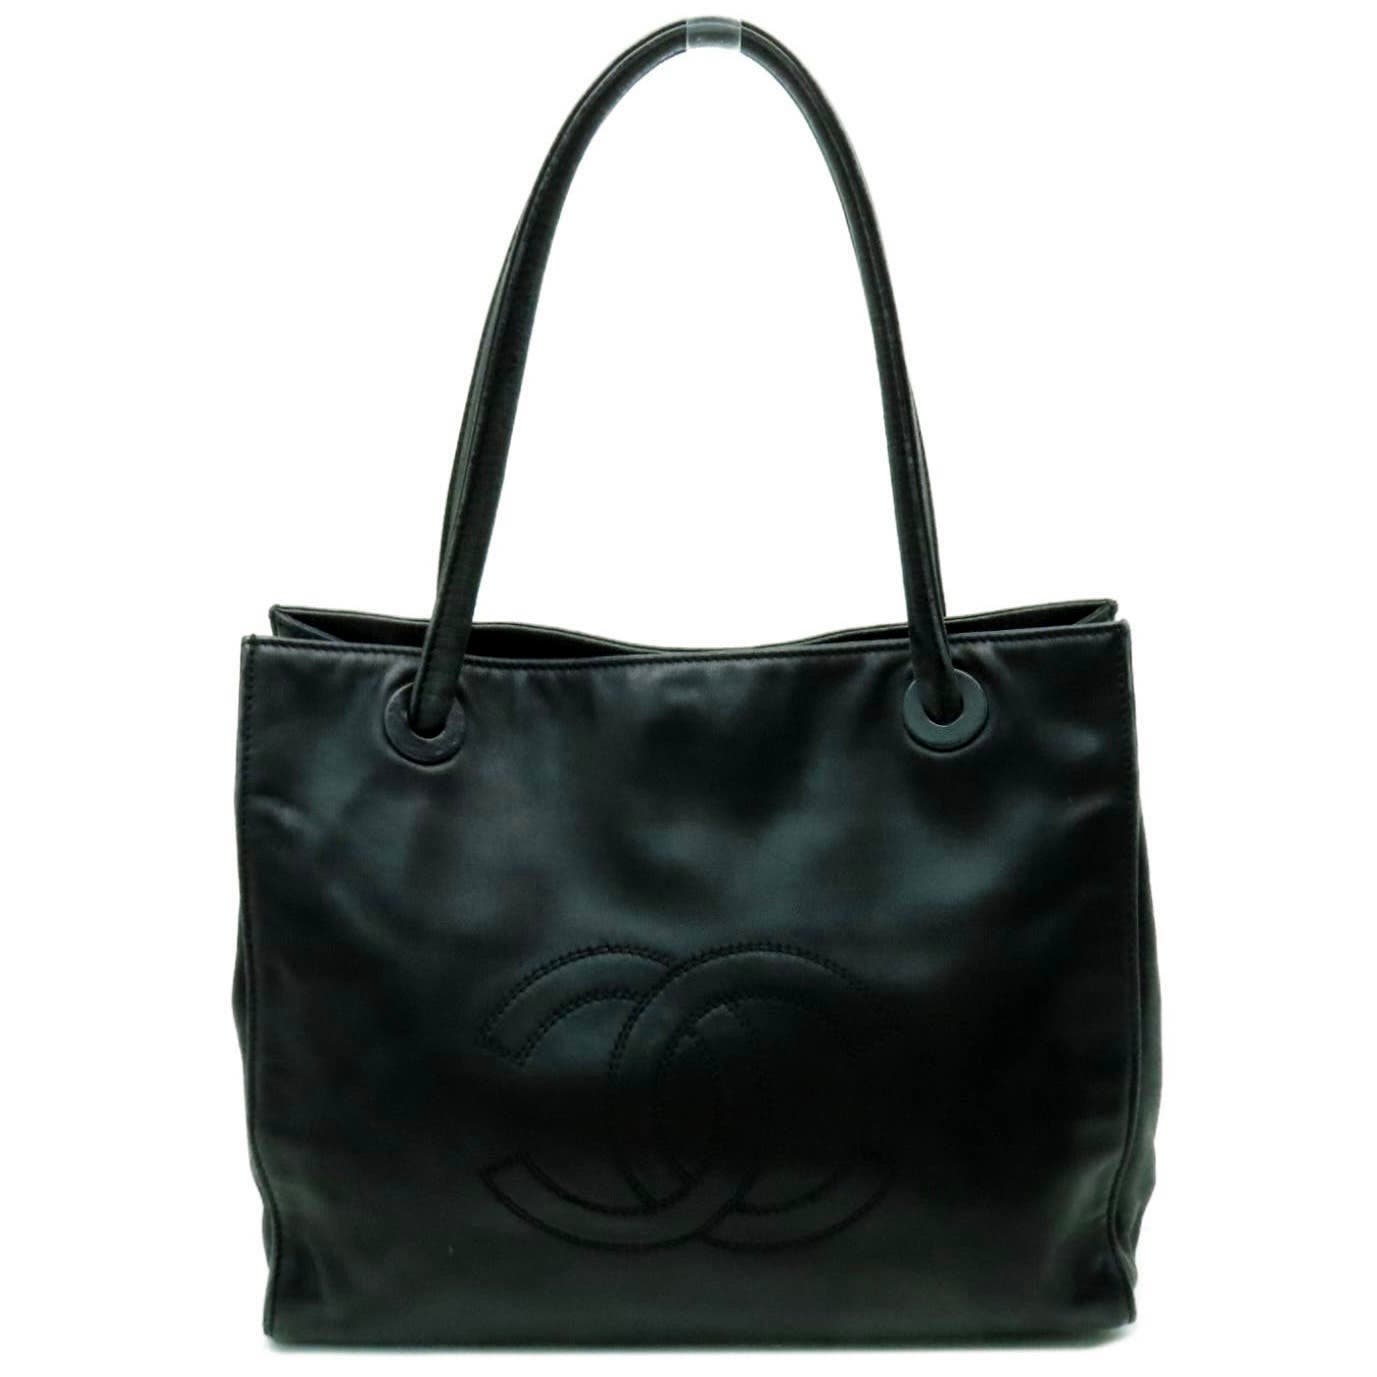 Authentic CHANEL CC Handbag Leather Black